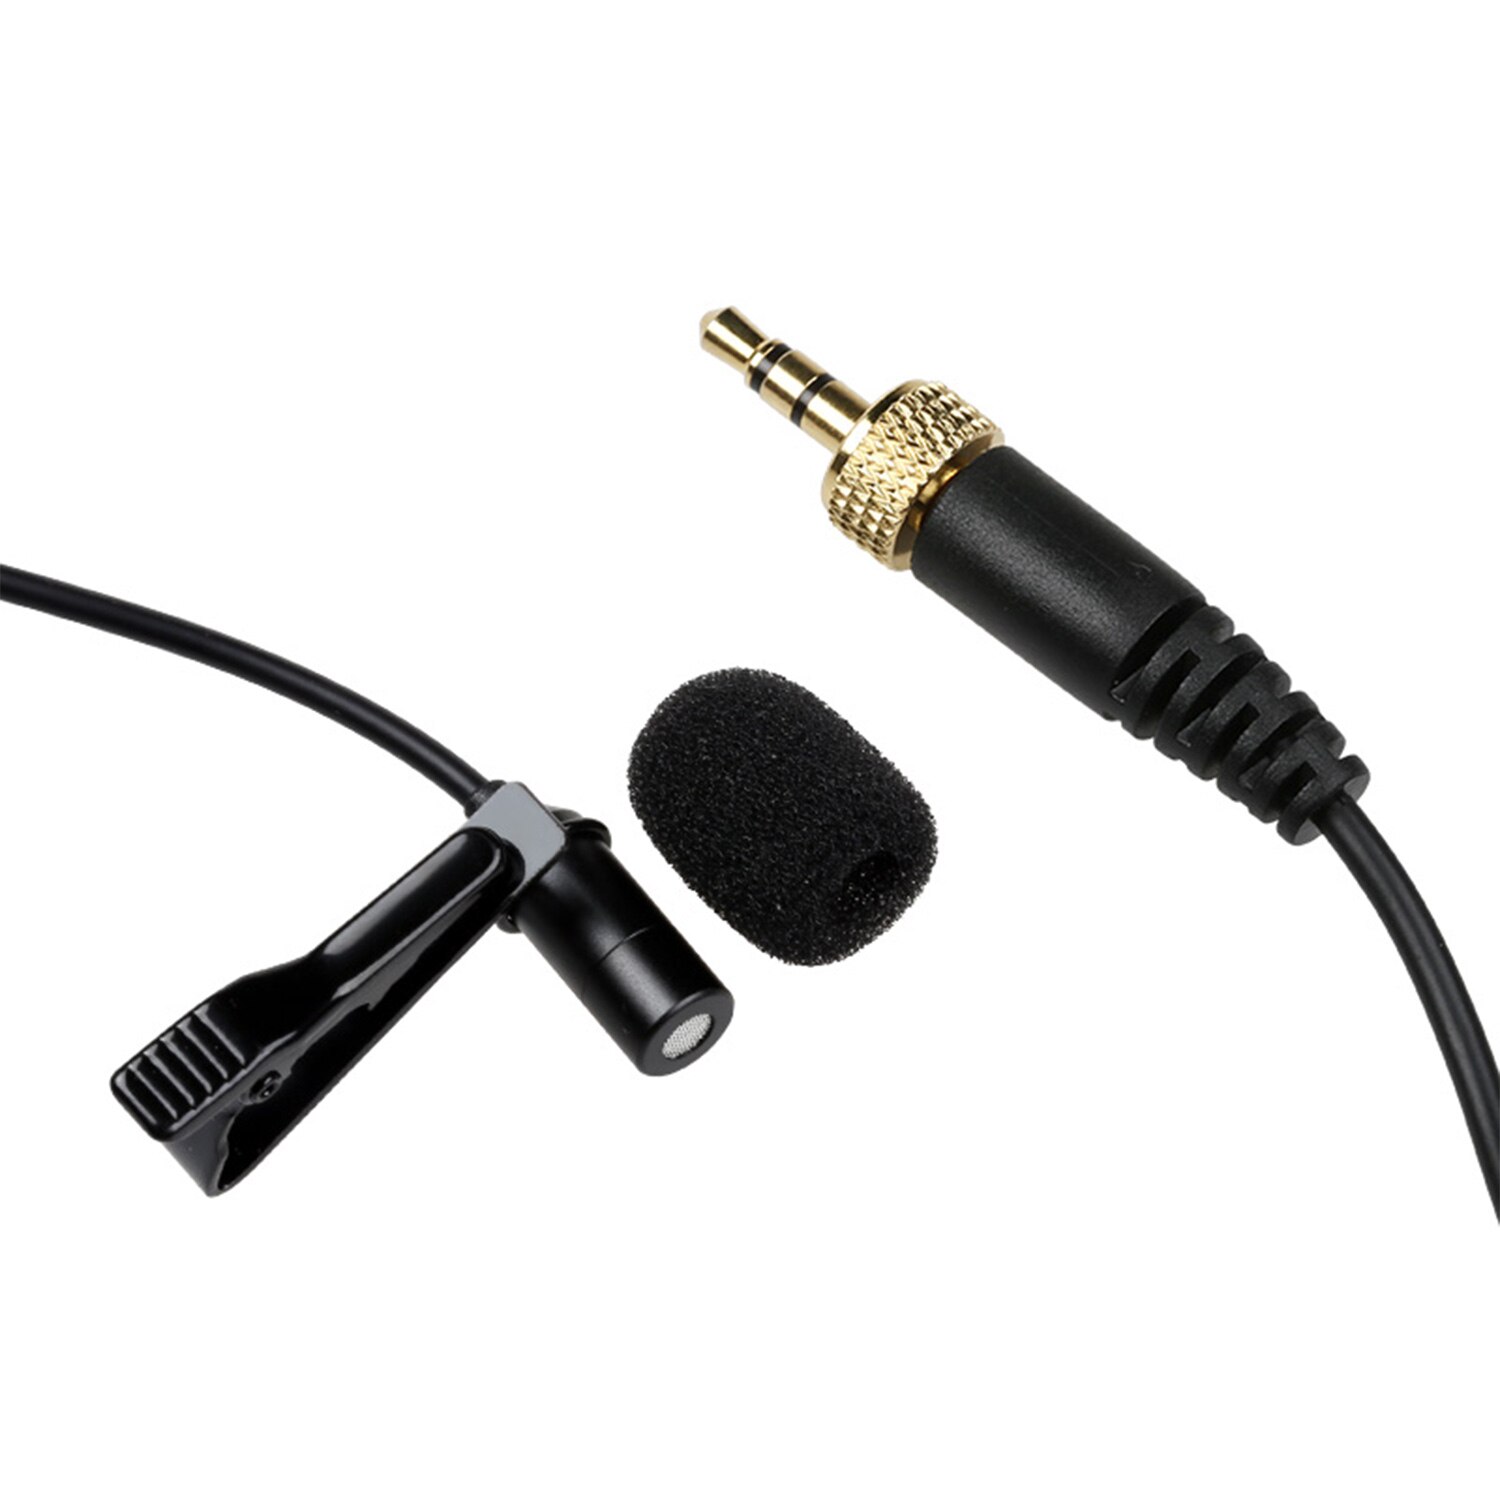 Mini Lavalier Microphone Lapel Tie Clip Condenser Mic for Audio Studio Conference Interview Network Sing